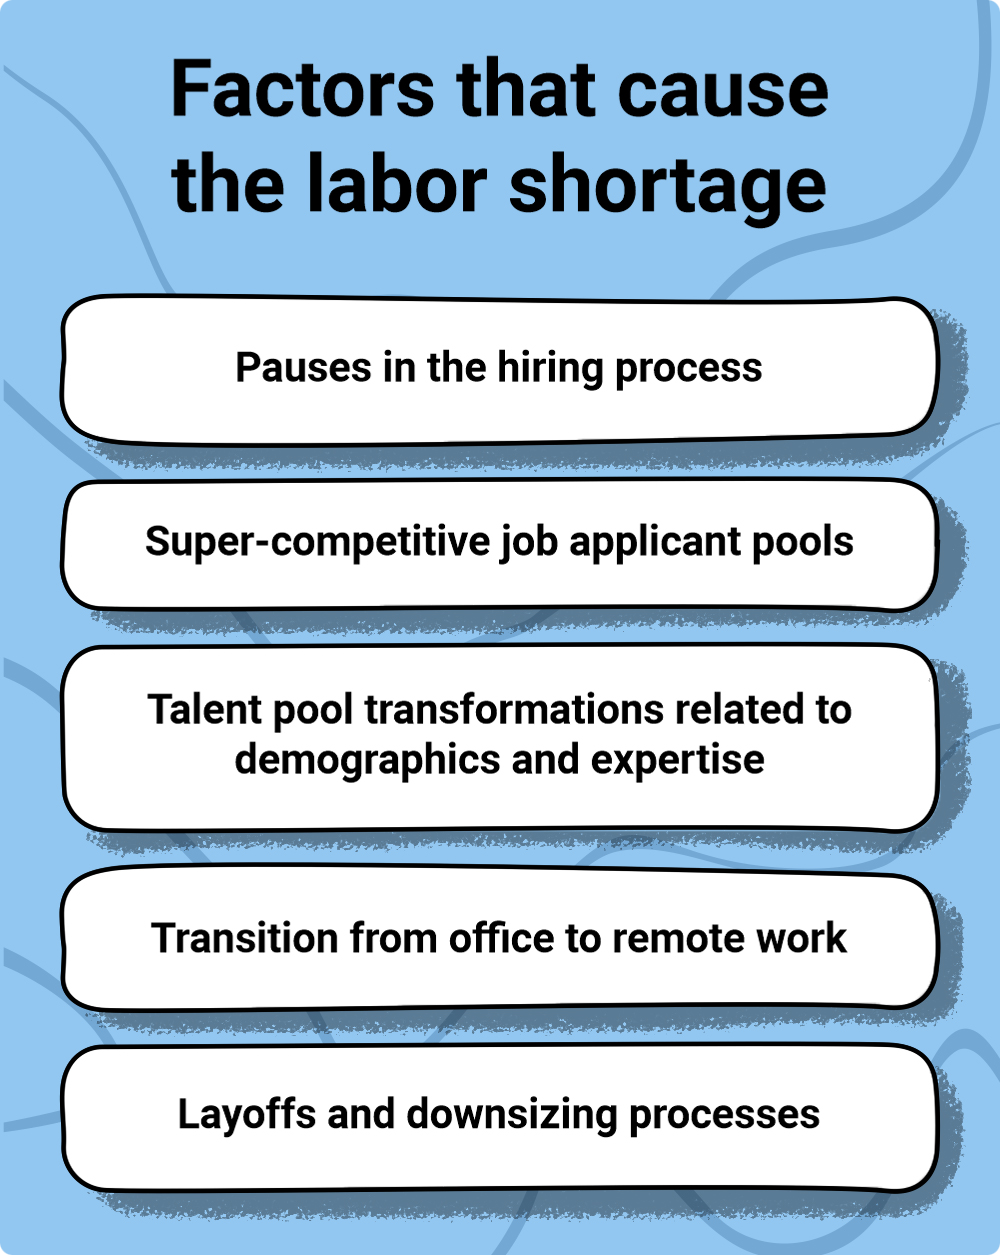 Factors that cause the labor shortage